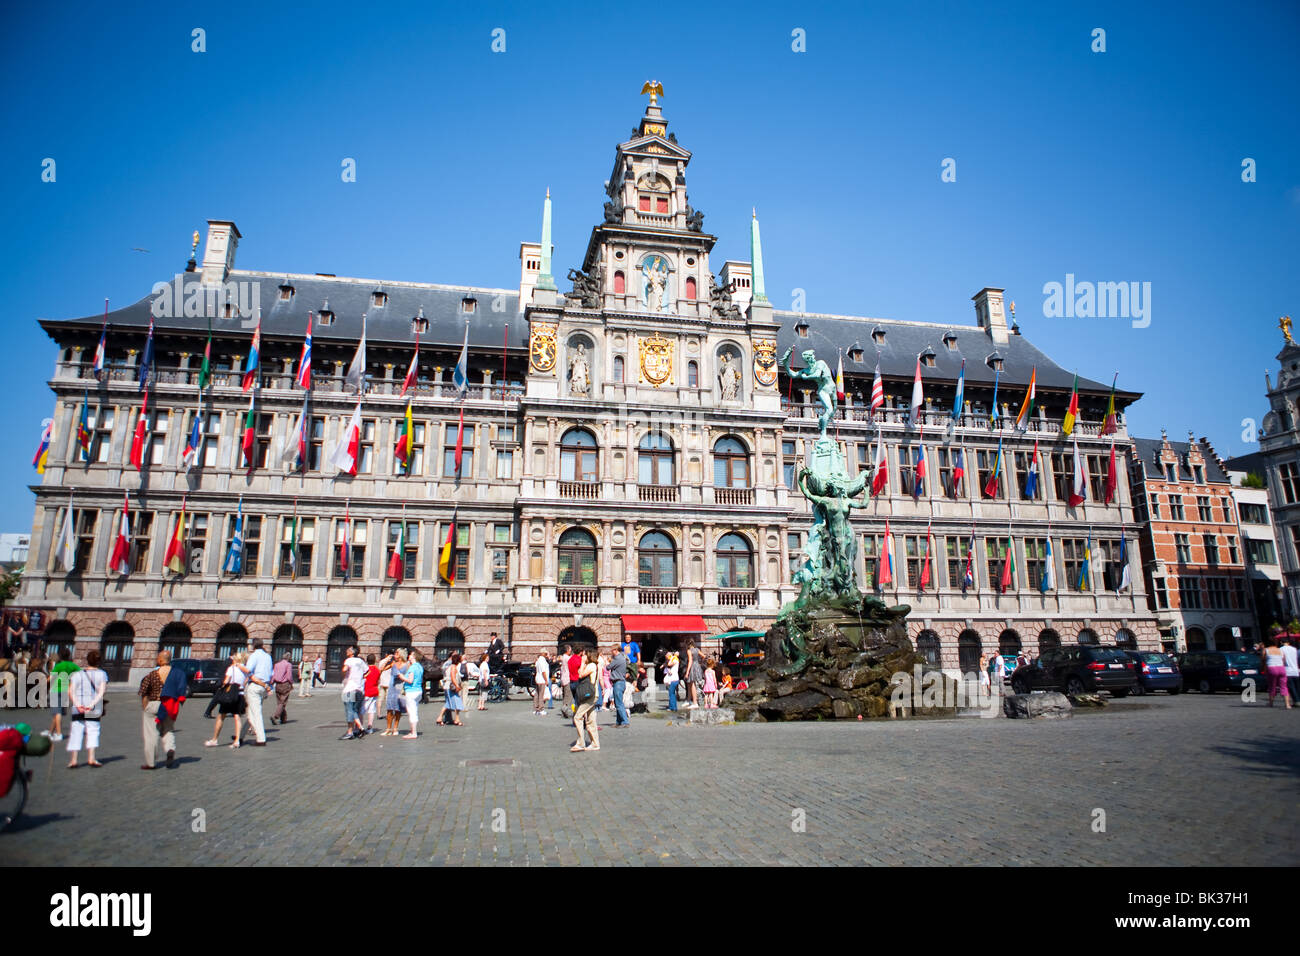 Town hall of the city of Antwerp in Belgium Stock Photo